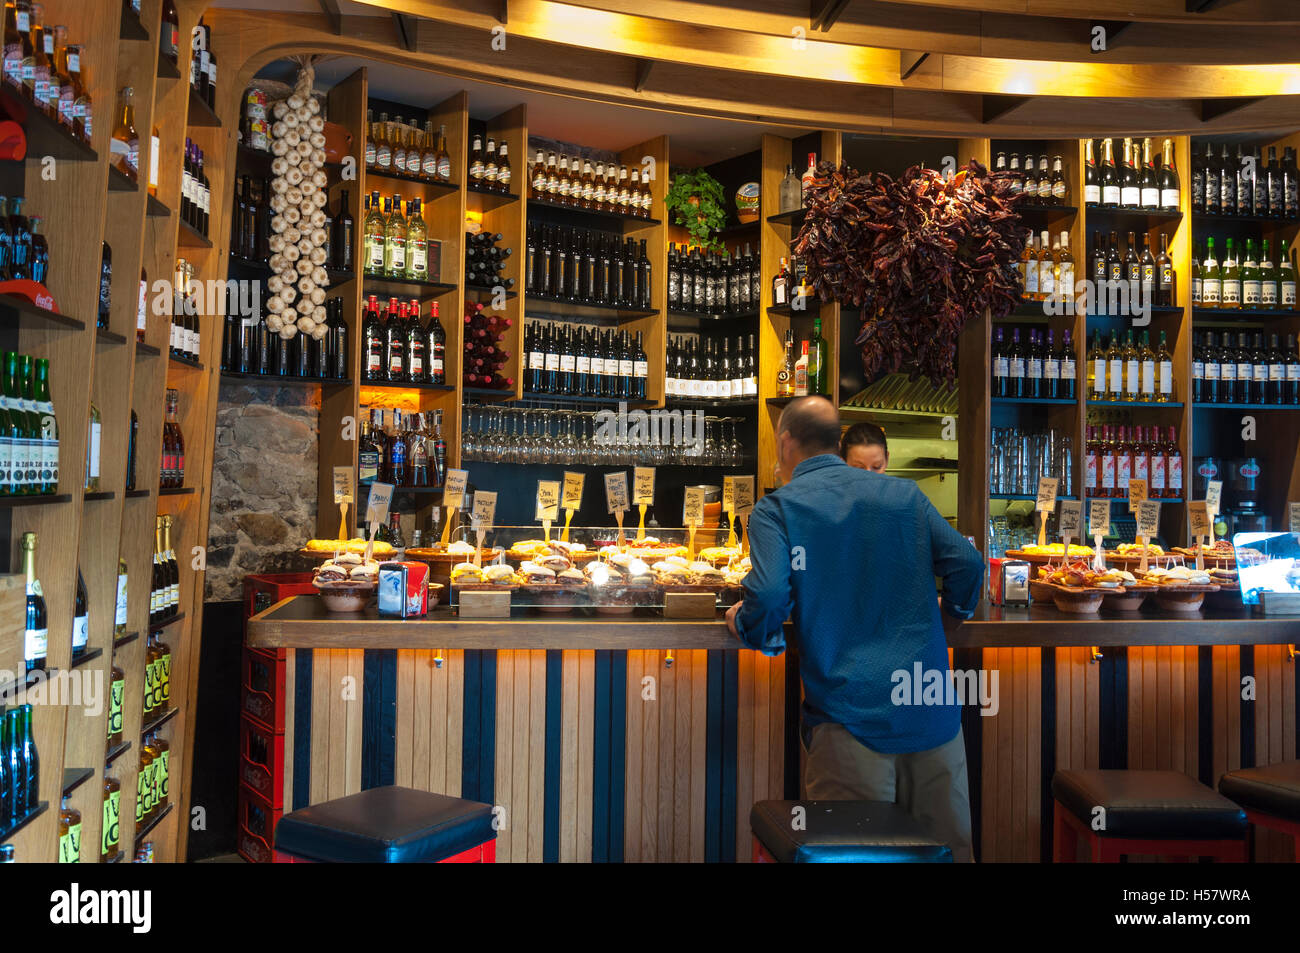 Zaharra Bar cafe winebar on Plaza Nueva, or Plaza Barria in Basque language, Bilbao, Spain Stock Photo